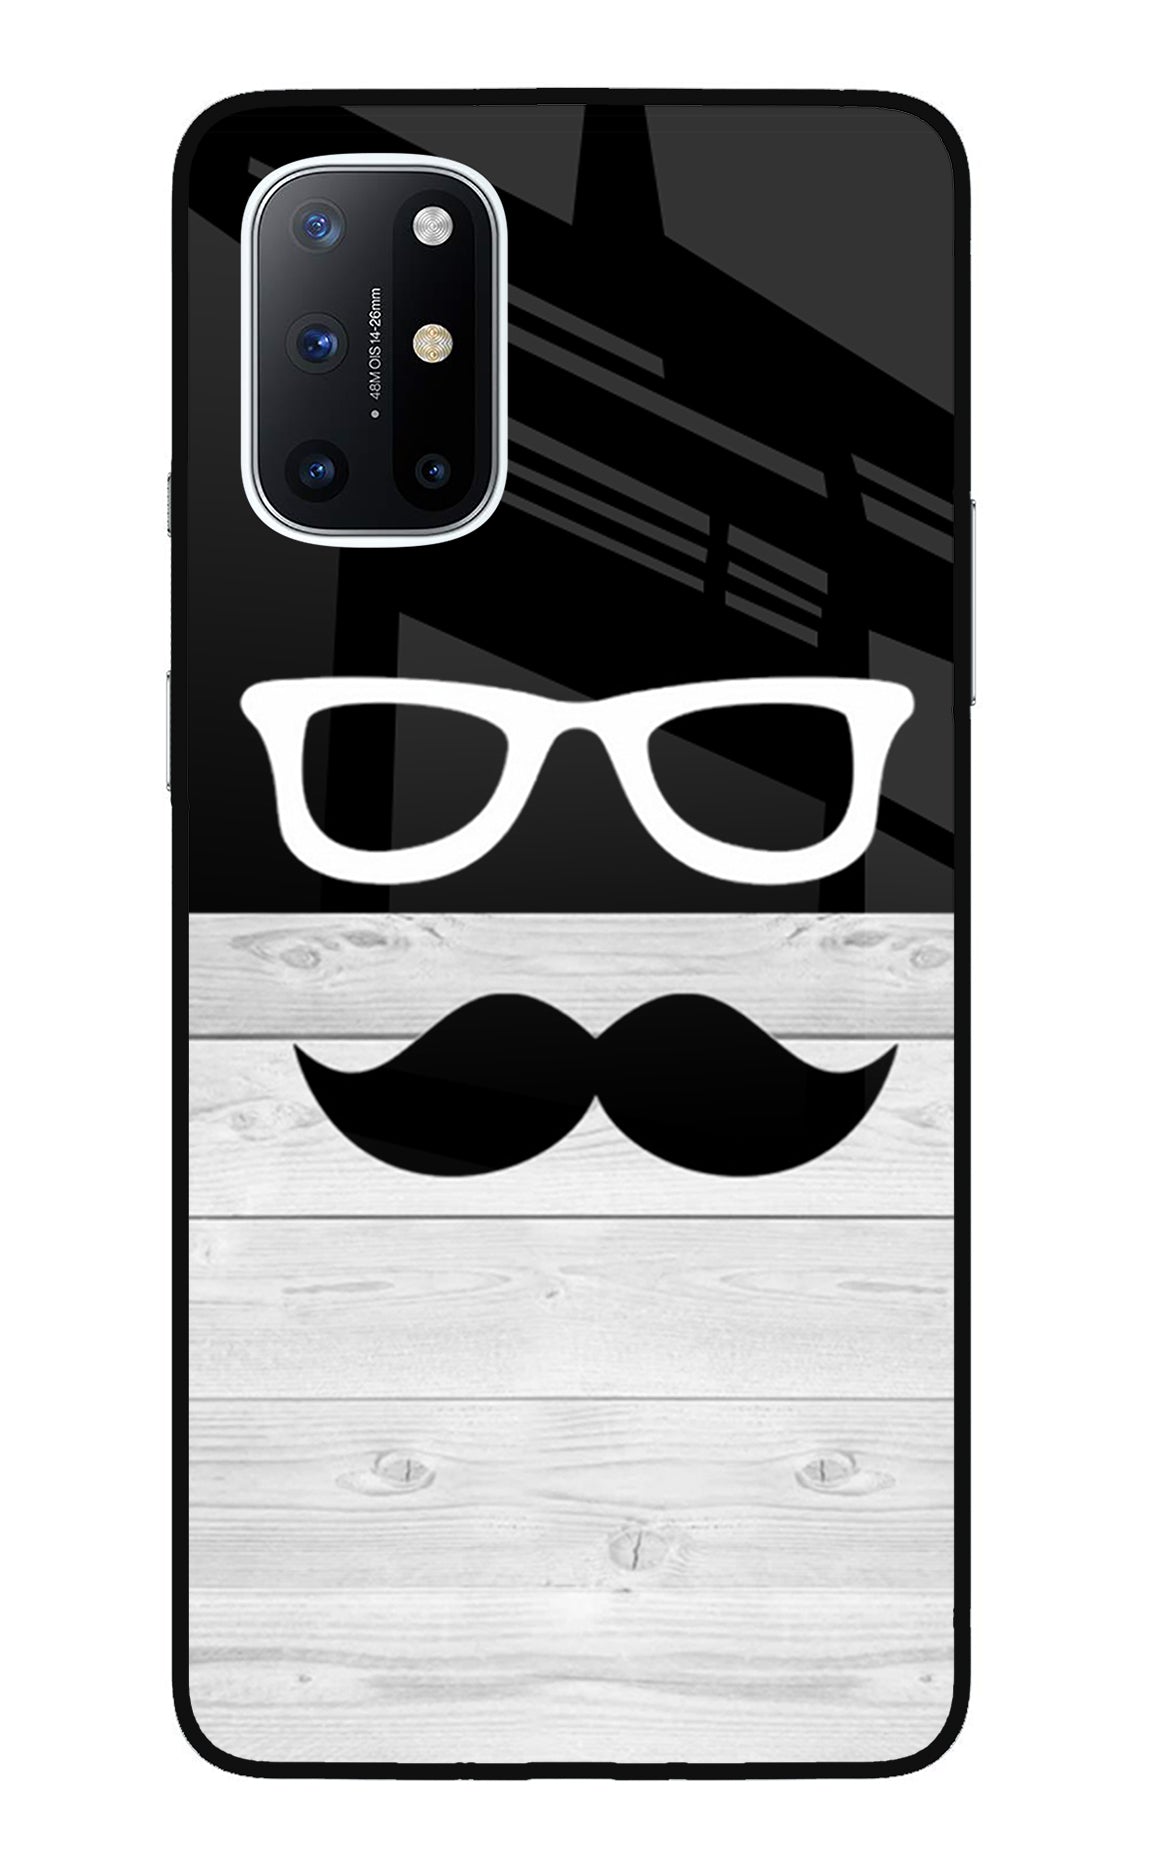 Mustache Oneplus 8T Glass Case